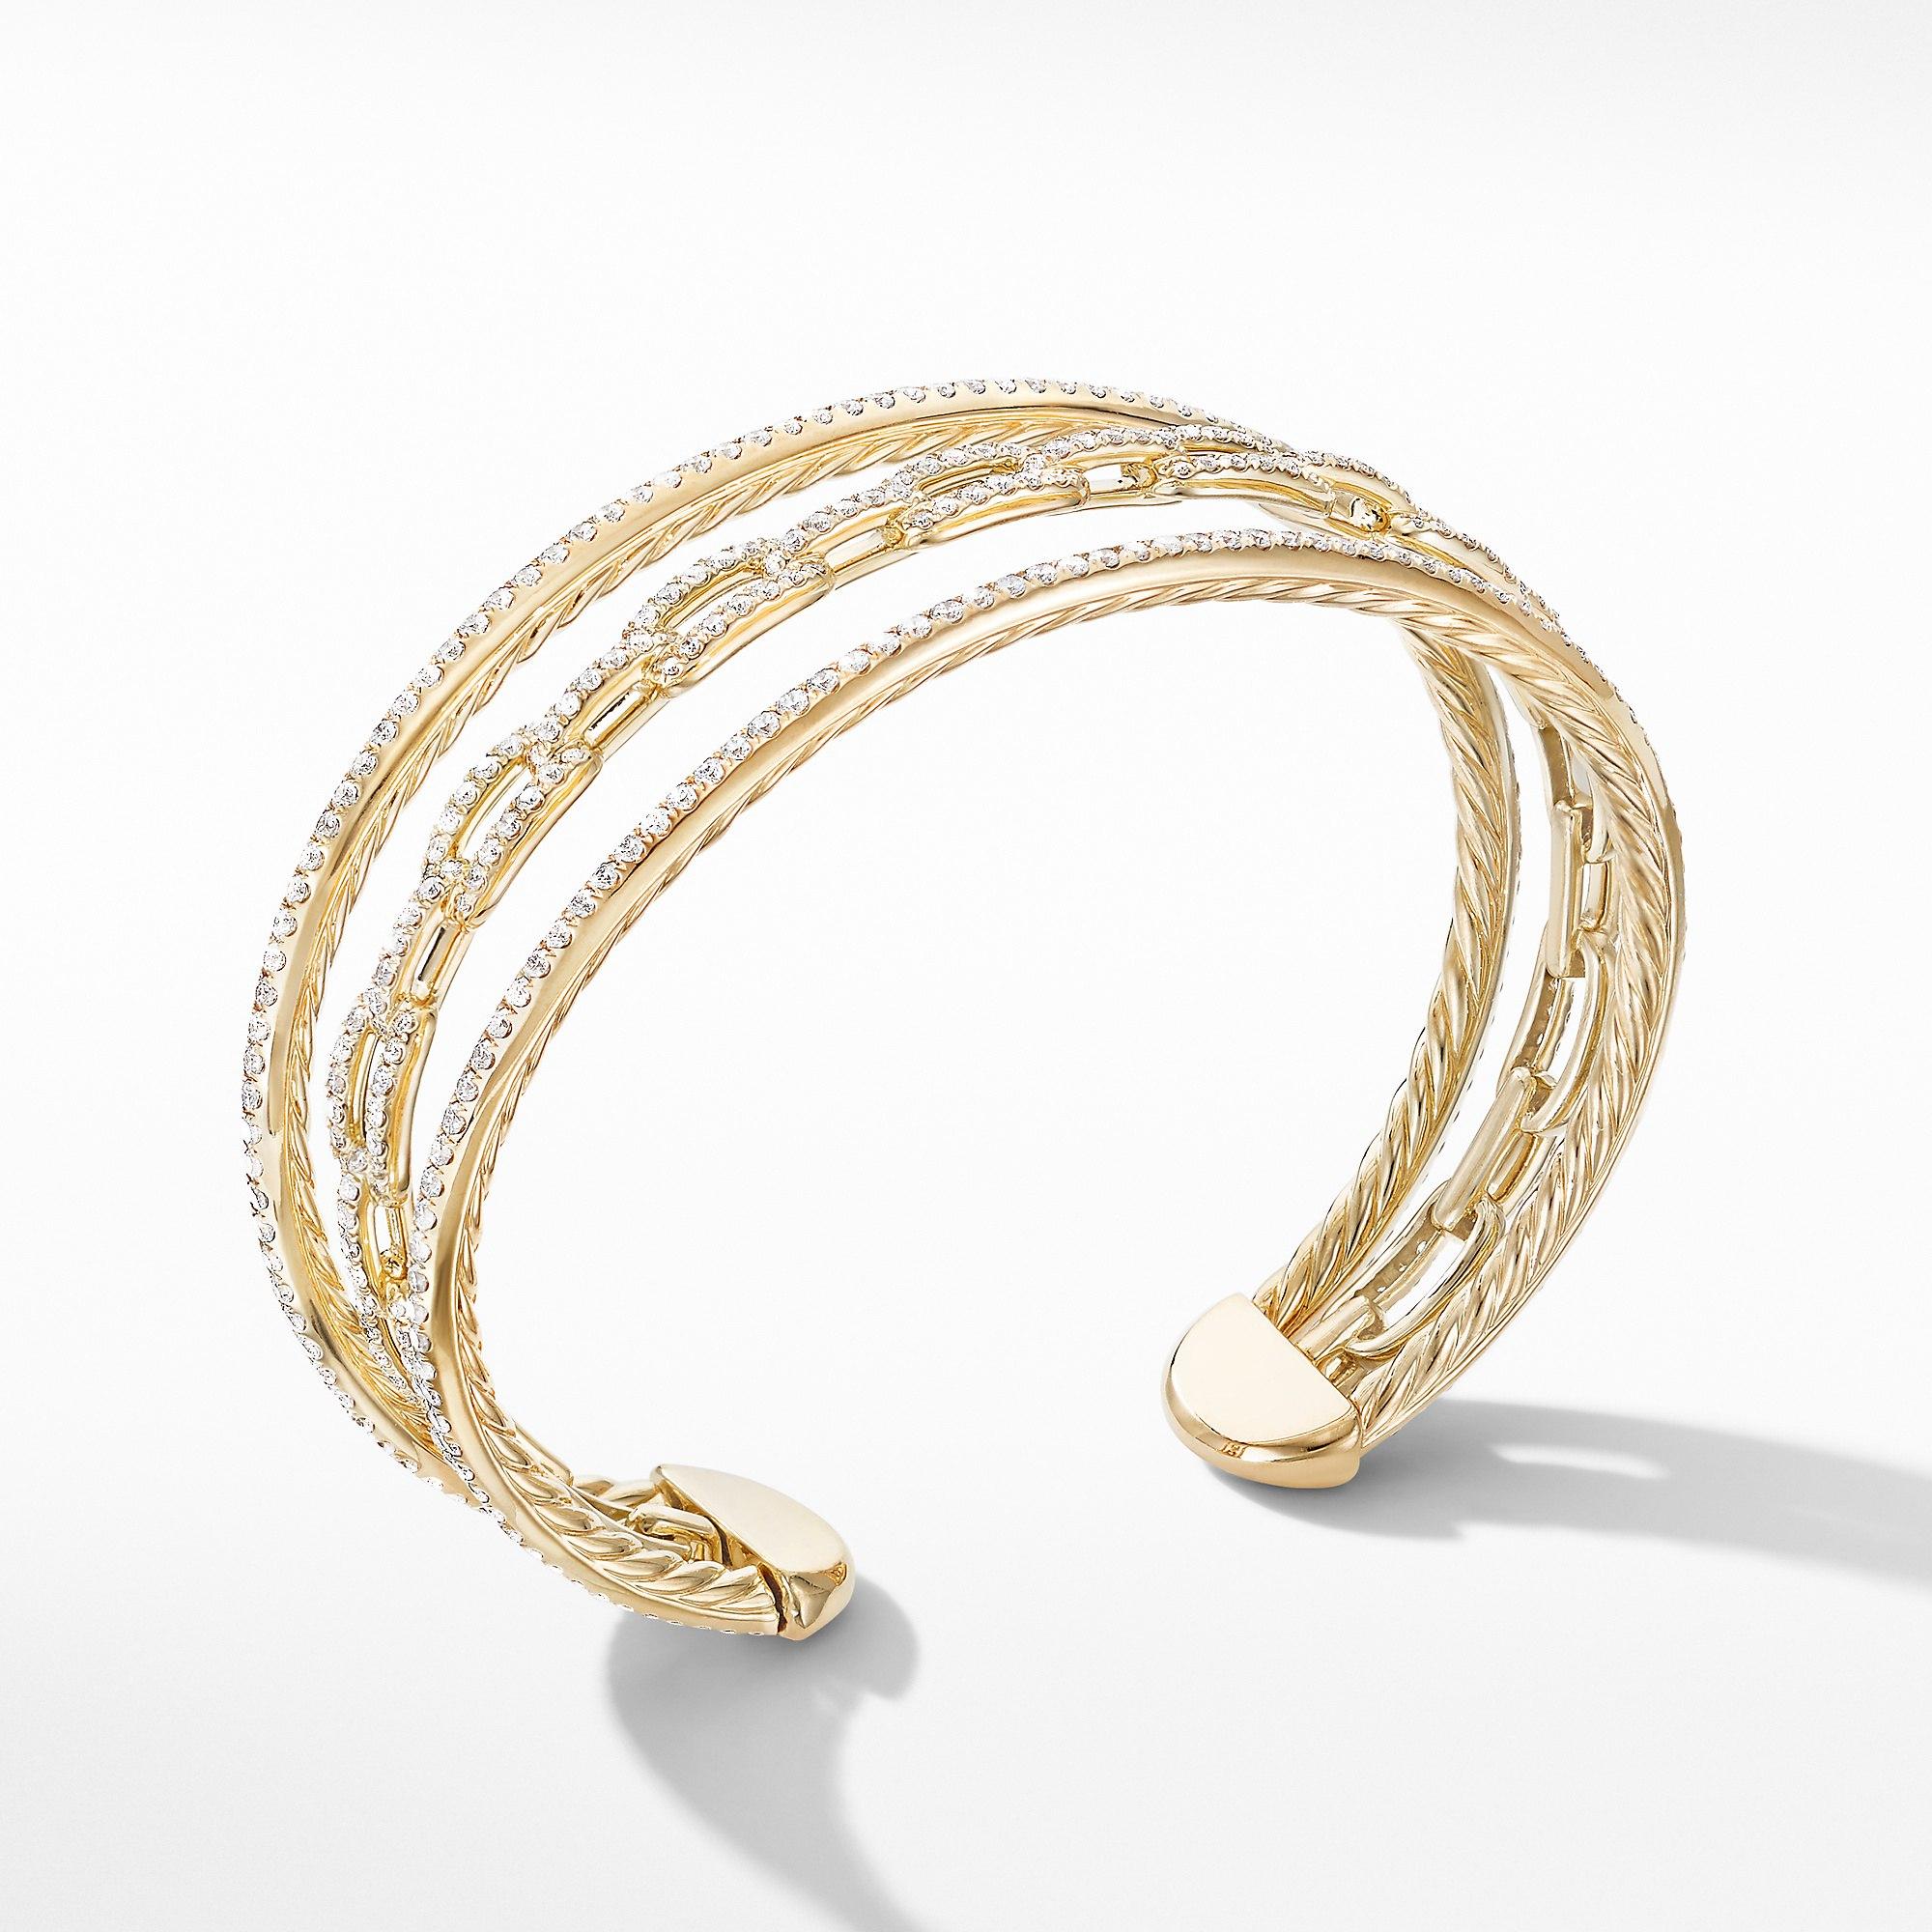 David Yurman Stax Three-Row Chain Link Bracelet in 18k Yellow Gold with Diamonds